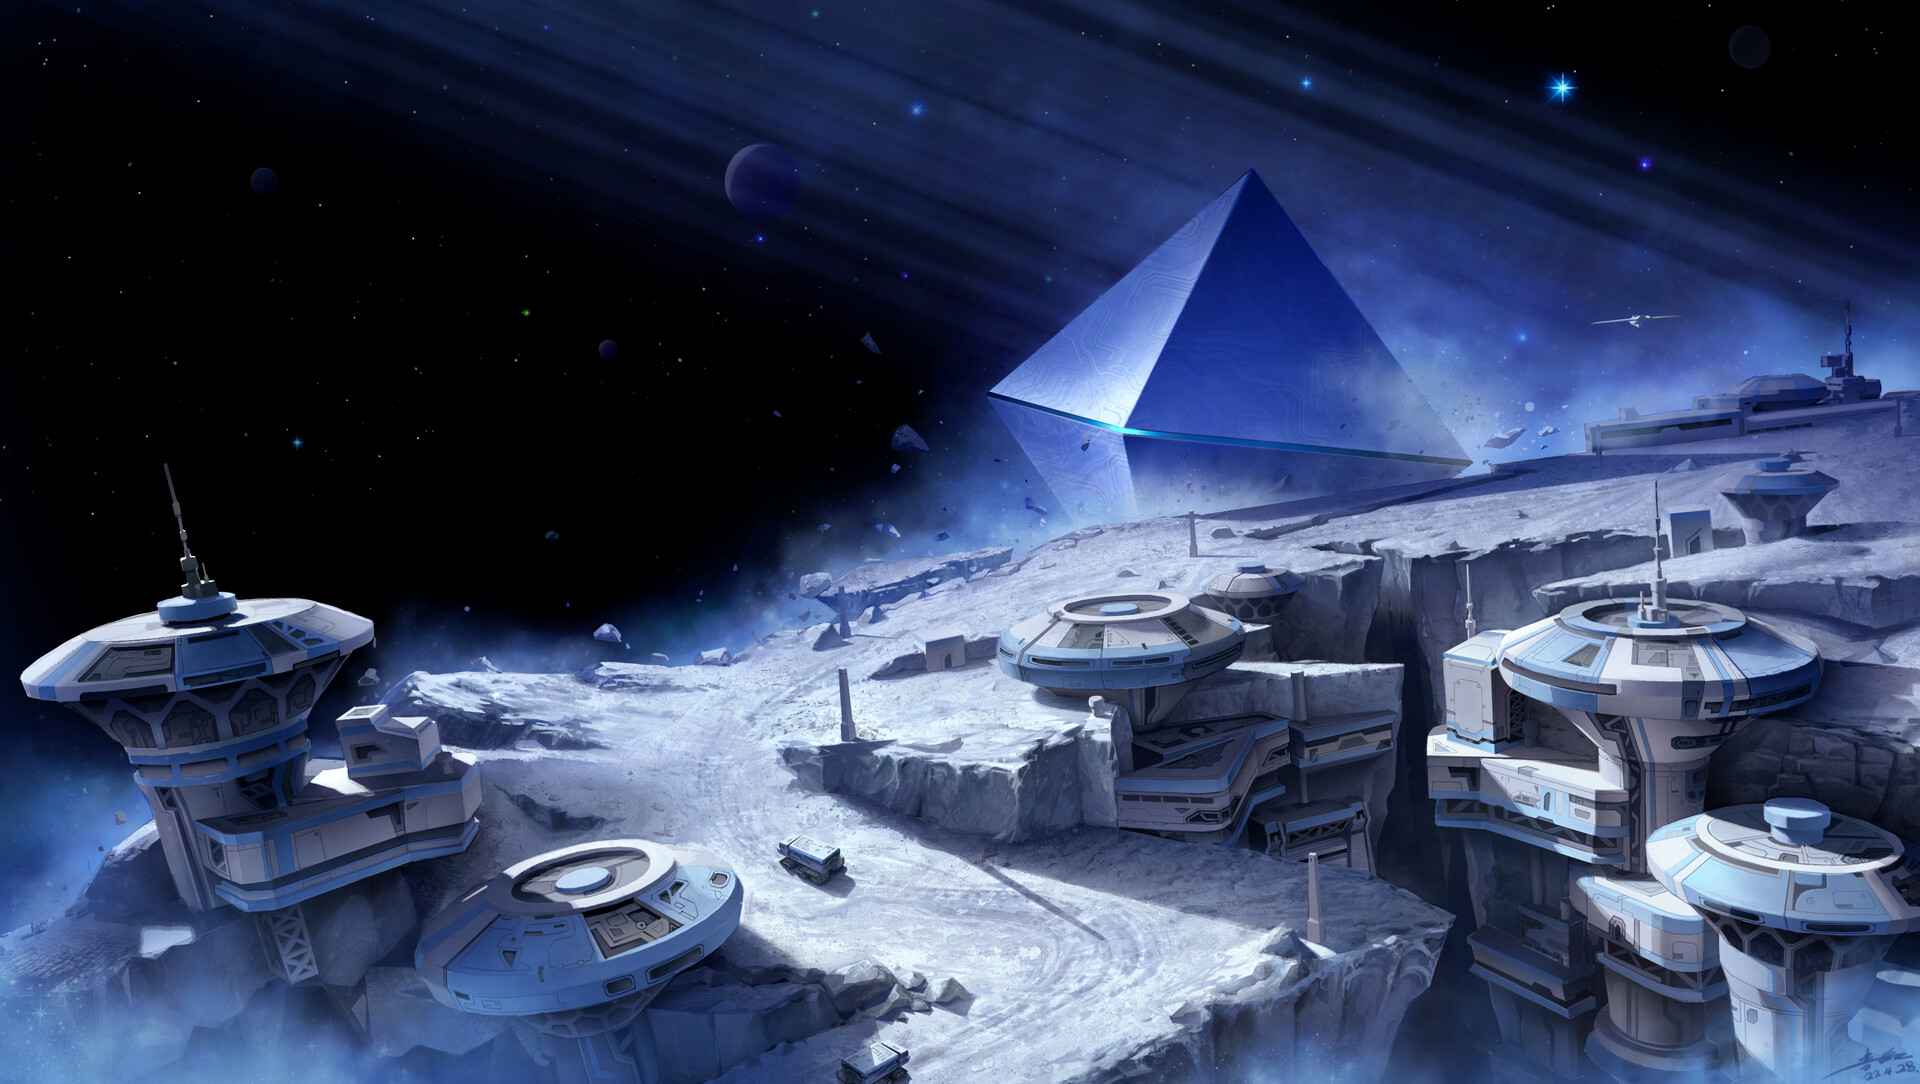 Digital Art Artwork Illustration Space Space Art Architecture Stars Pyramid Galaxy Event Horizon 1920x1084